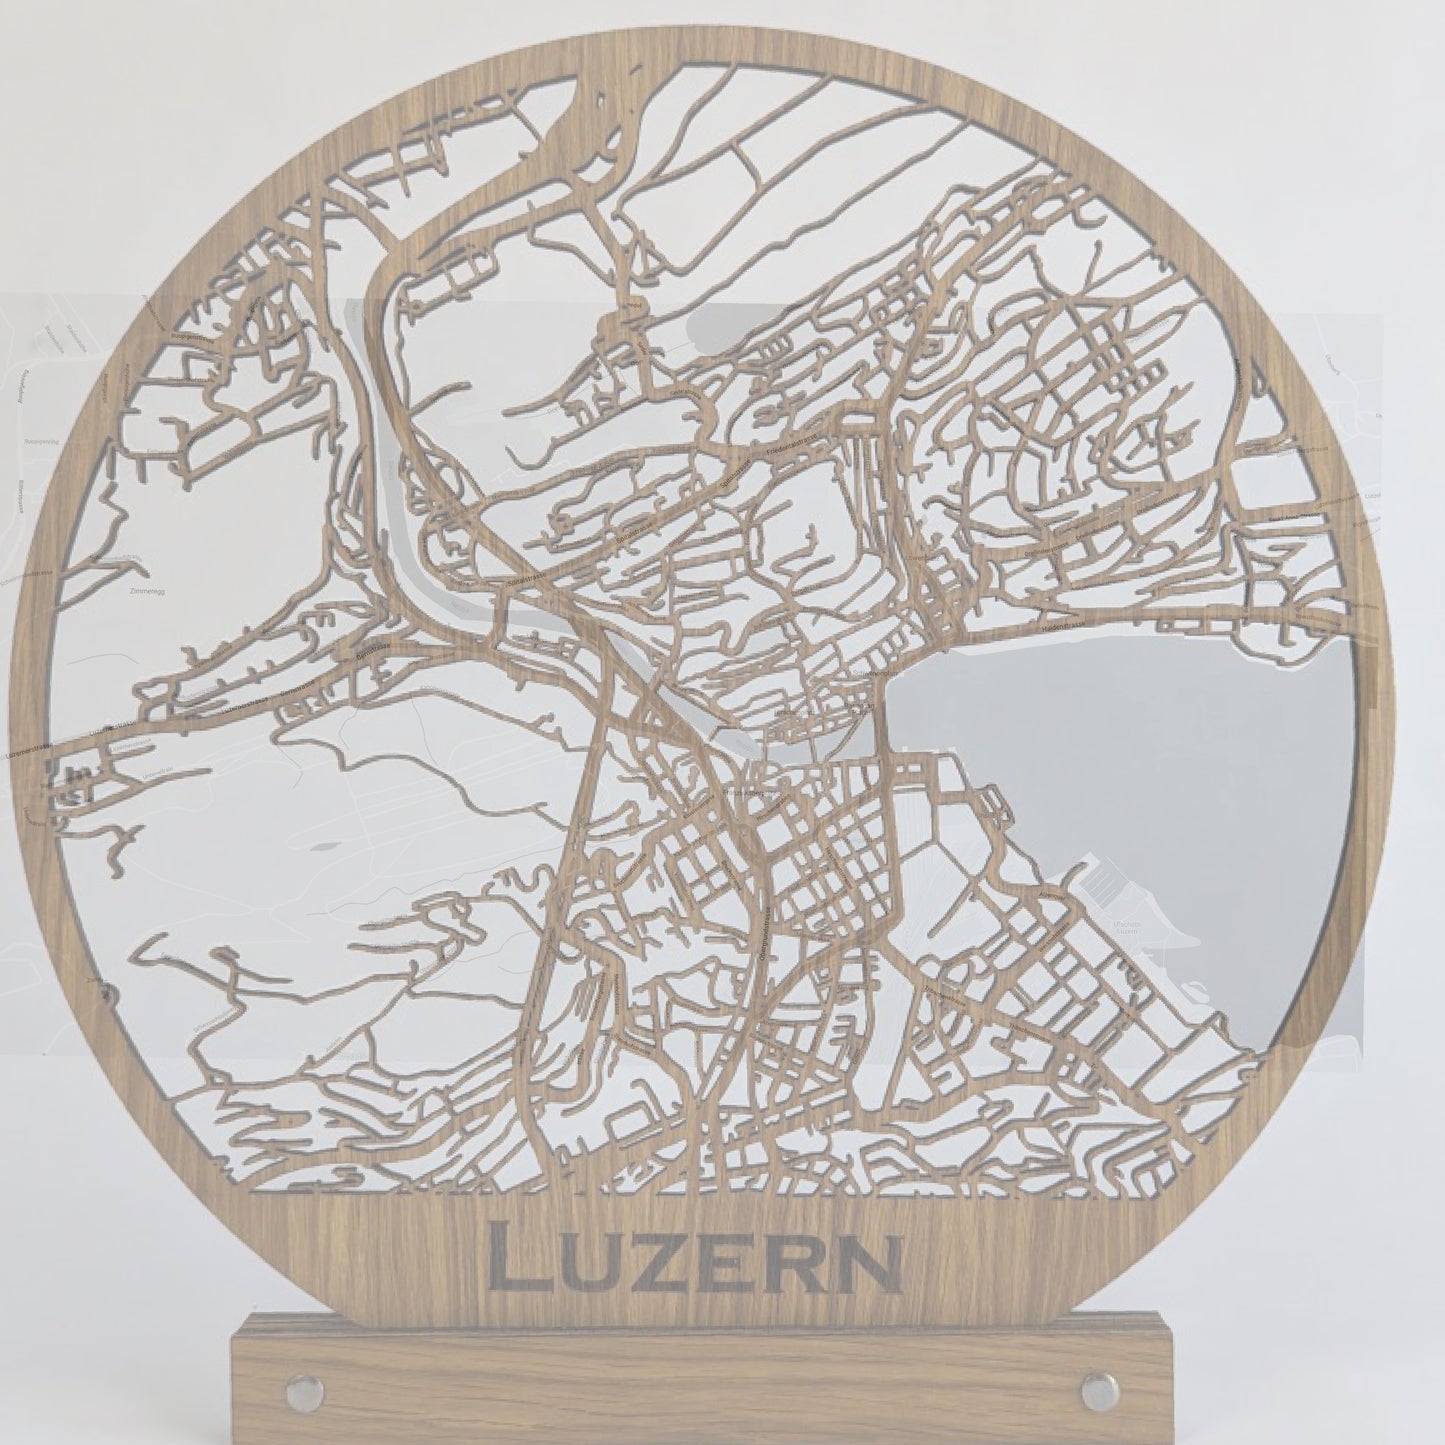 Stadtplan Luzern